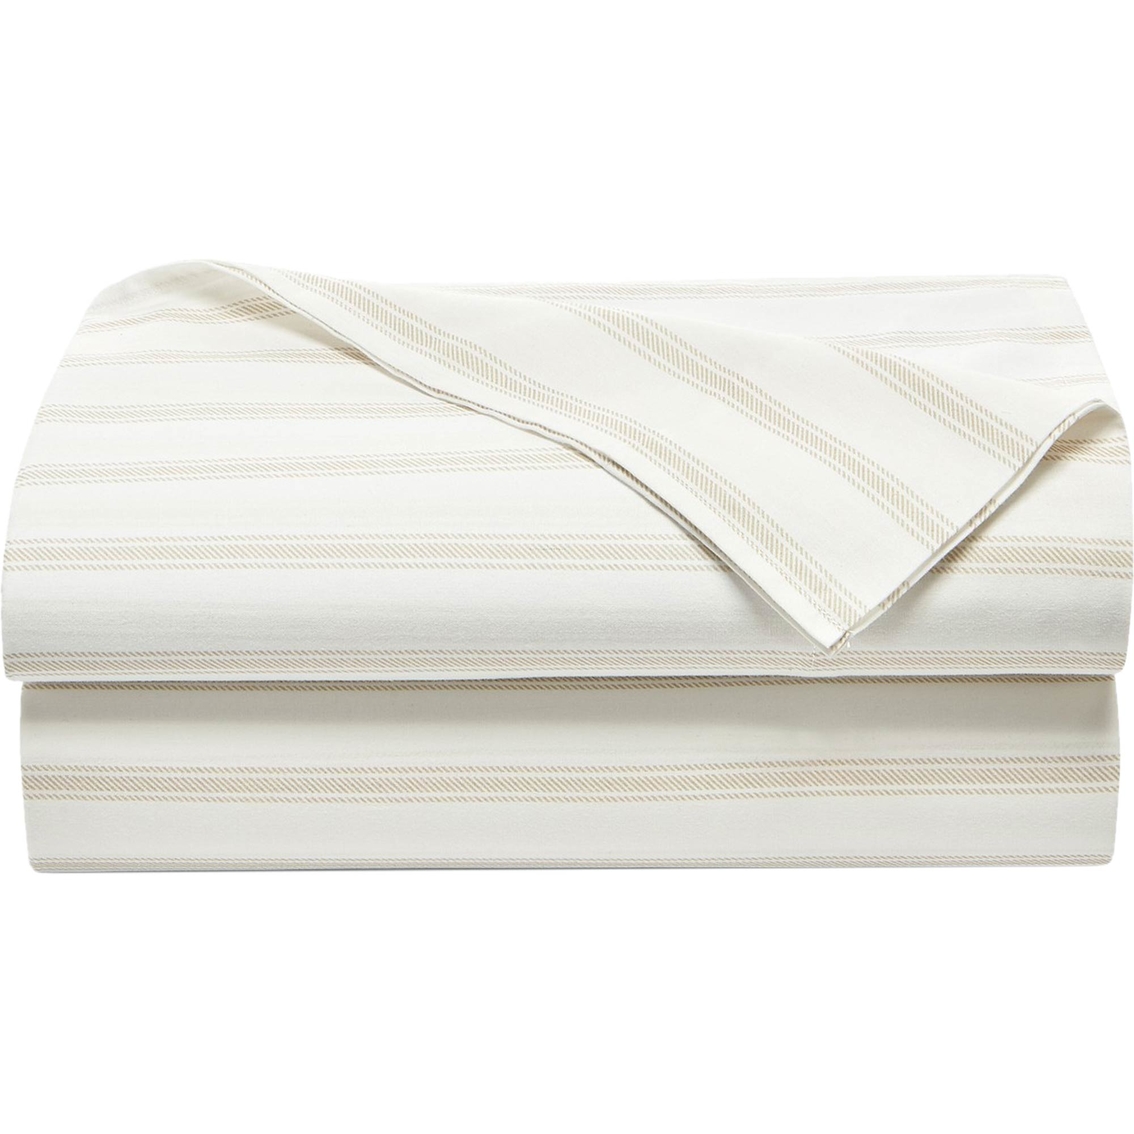 Martha Stewart Collection Eyelet Stripe Cotton 8 pc. Comforter Set - Image 4 of 4